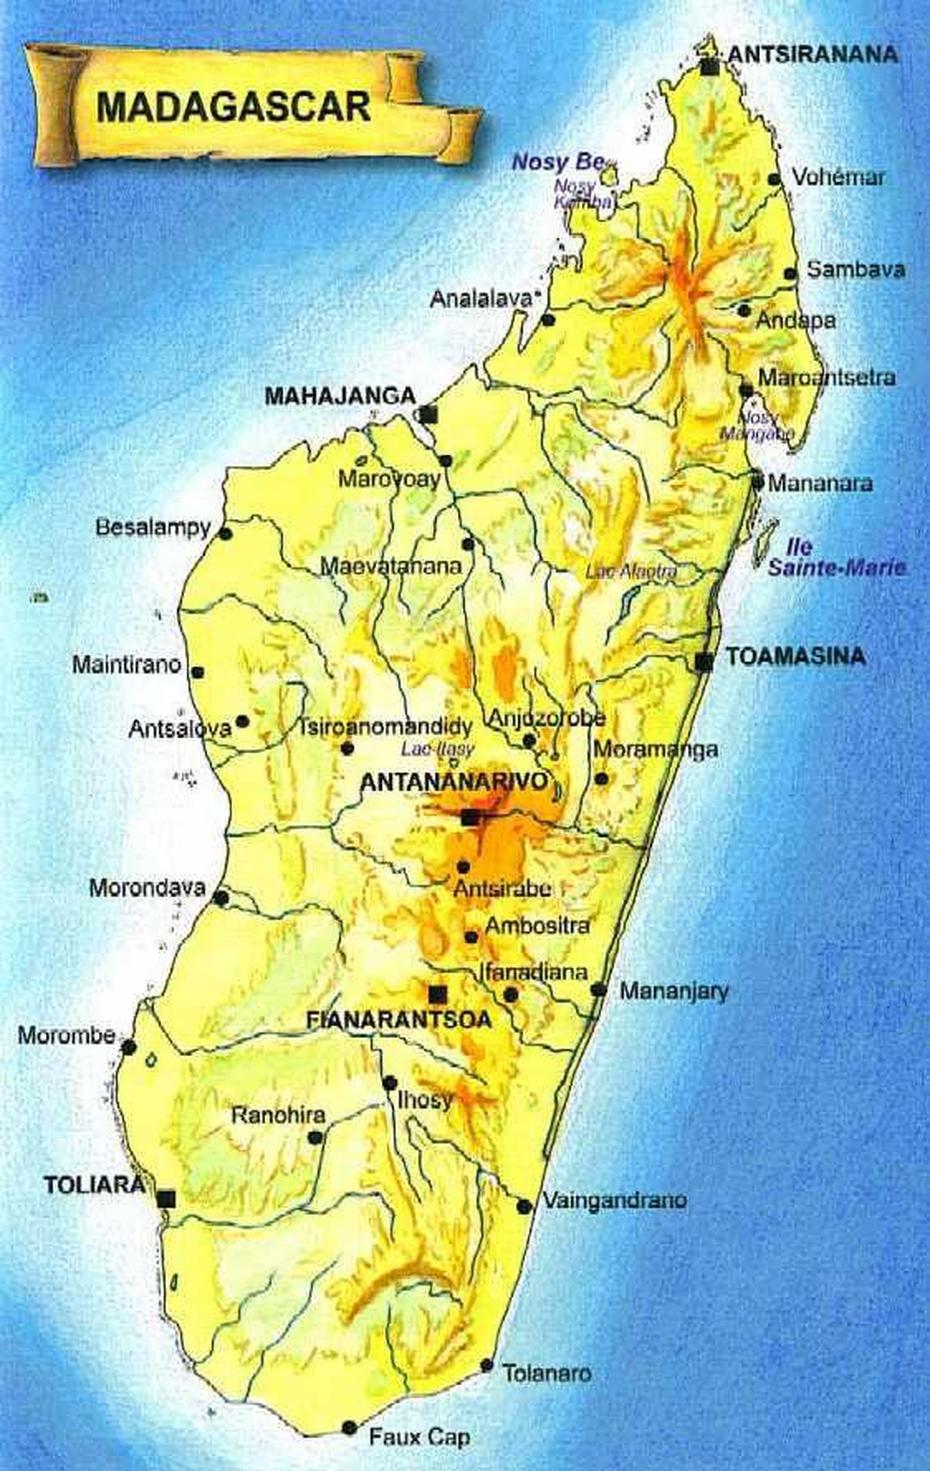 La Carte De Madagascar : La Carte De Madagascar / La Carte Est Vraiment …, Vohipeno, Madagascar, Madagascar Un Mission, Madagascar Magazine